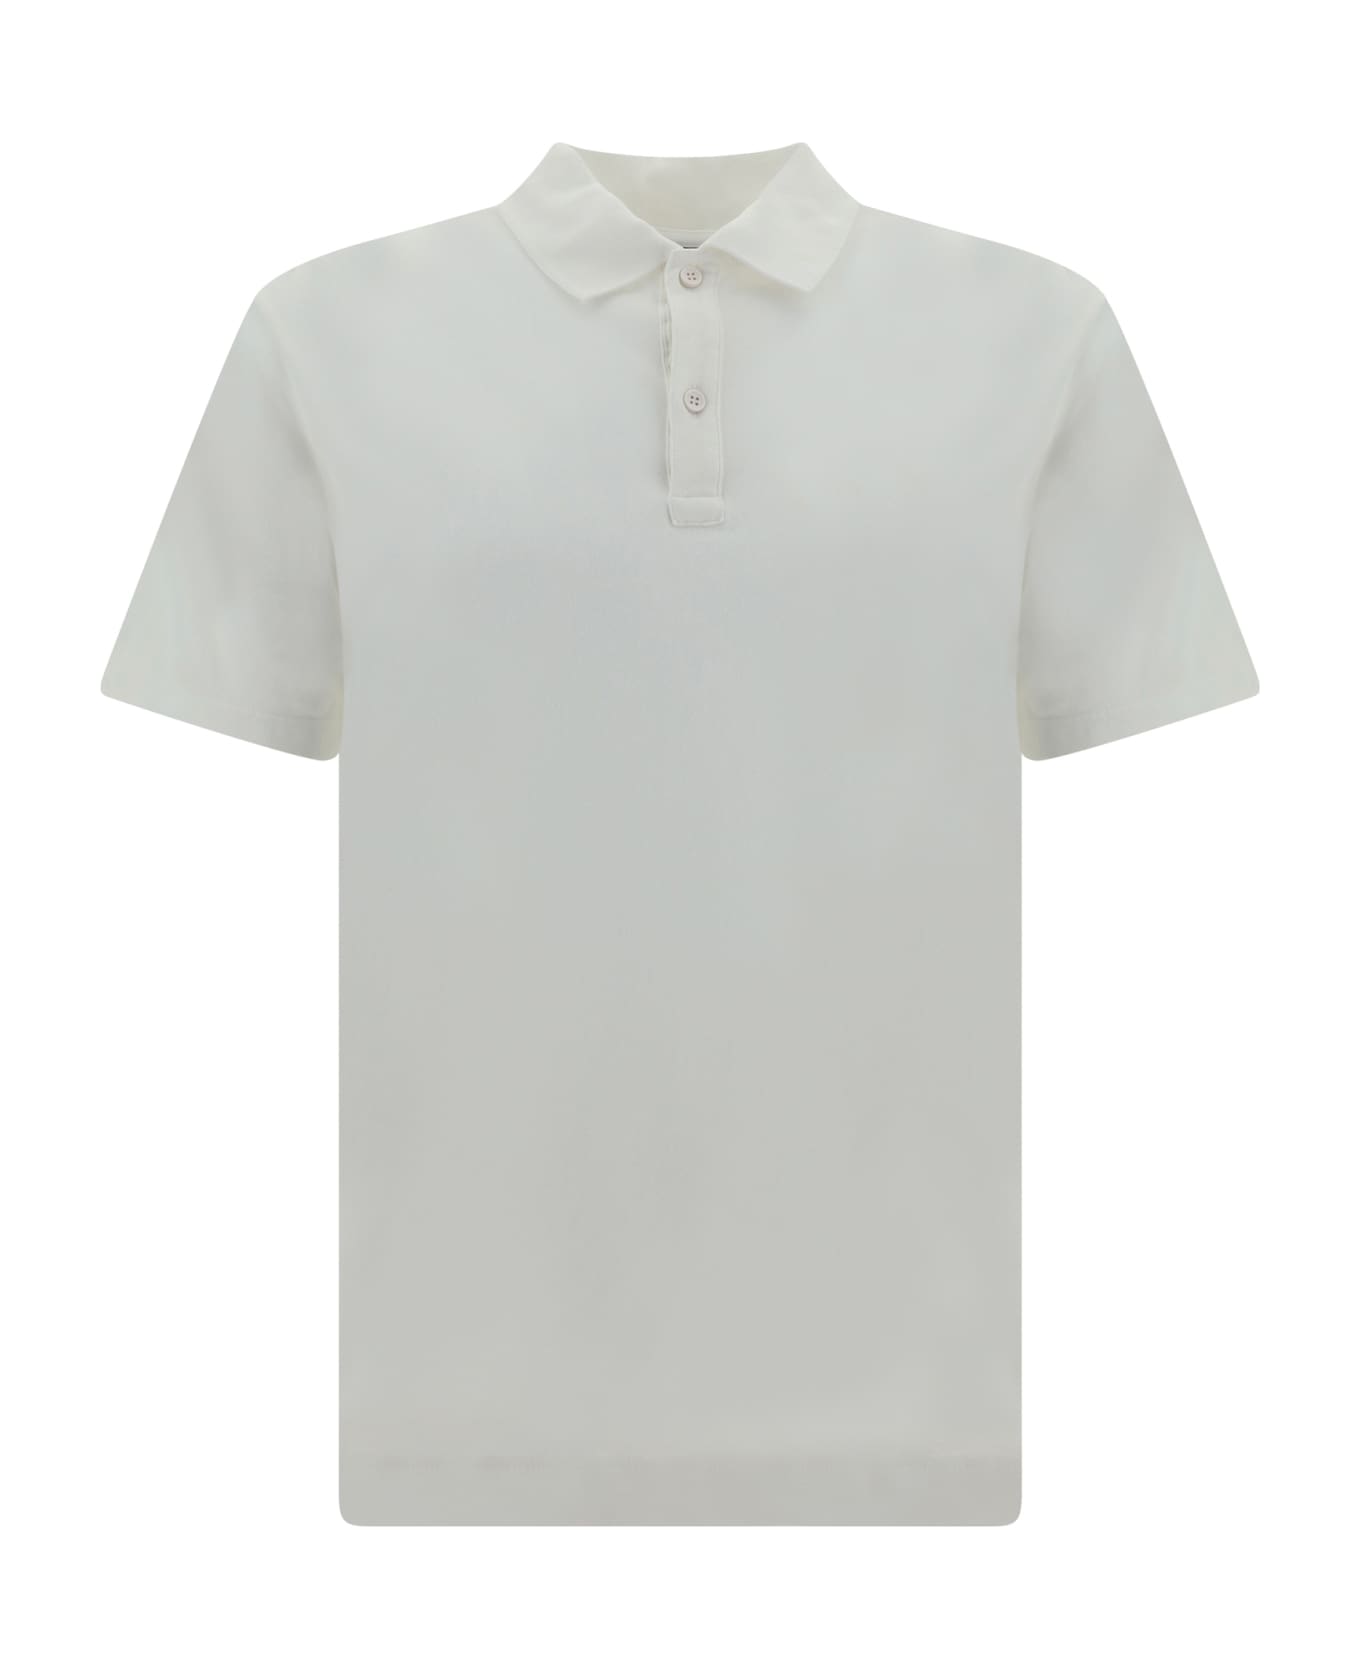 Paul&Shark Polo Shirt - Bianco ポロシャツ